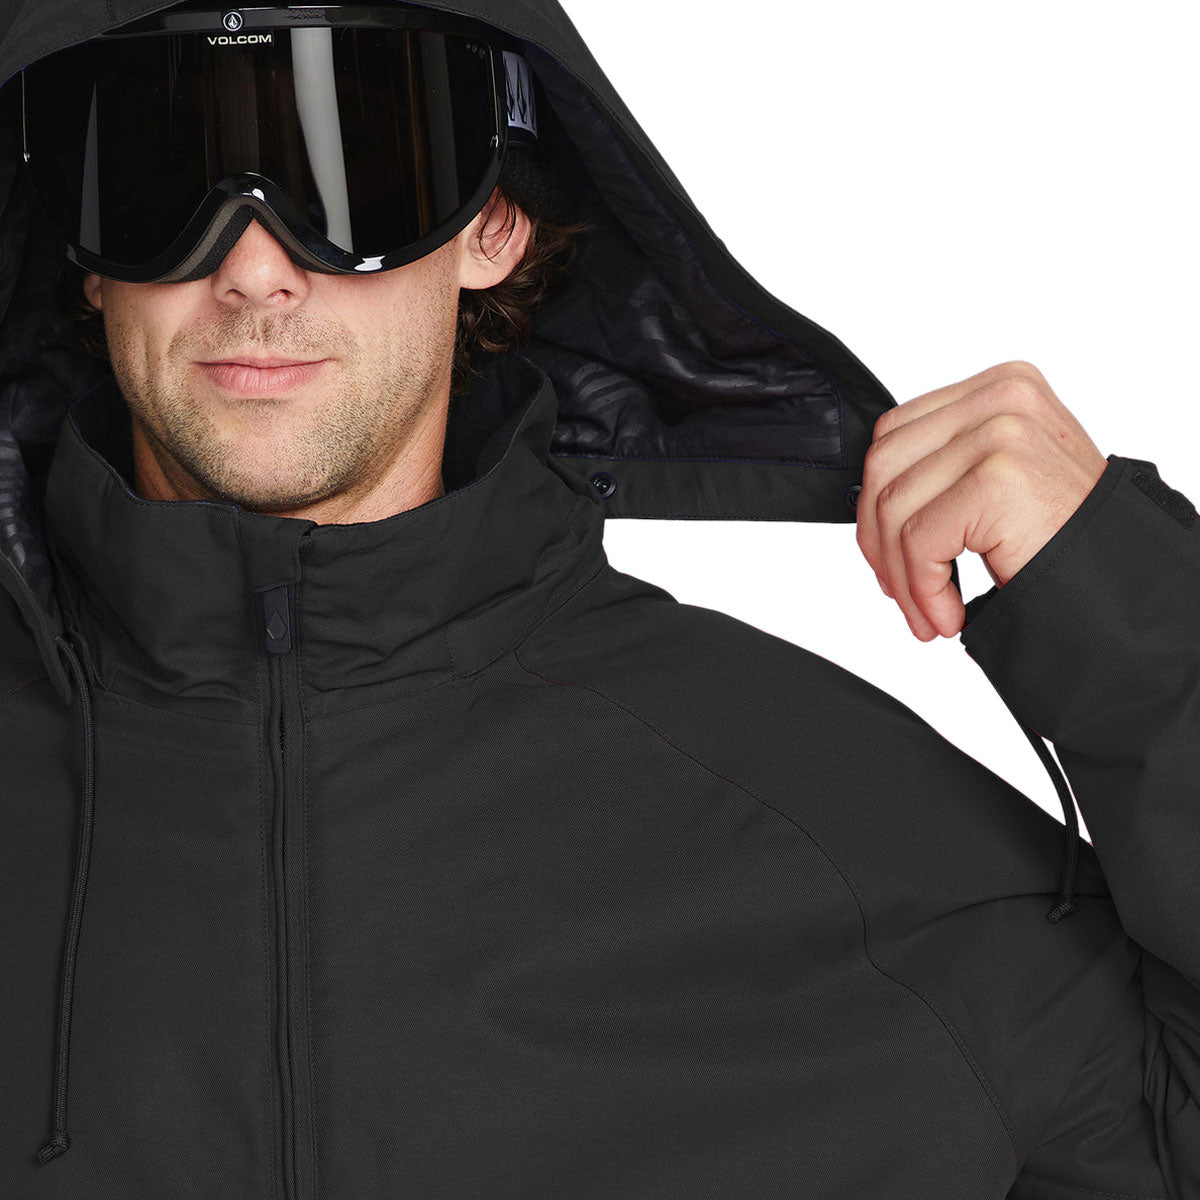 Volcom 2836 Insulated Snowboard Jacket - Black image 3